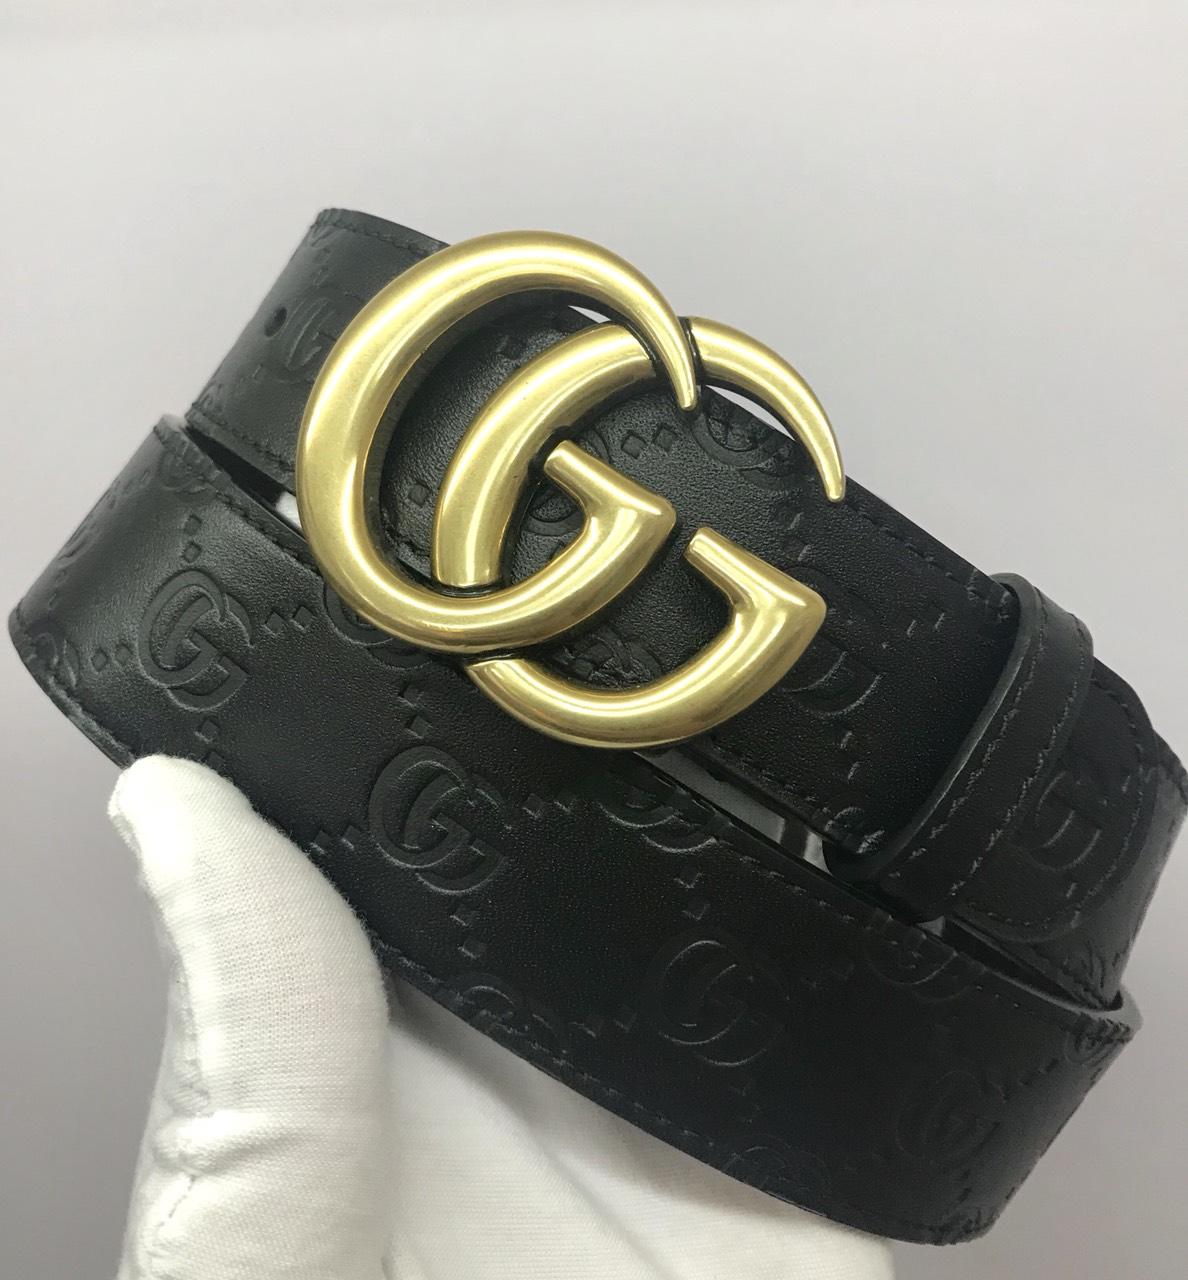 GG Gucci Black leather Gold buckle belt ASS02388